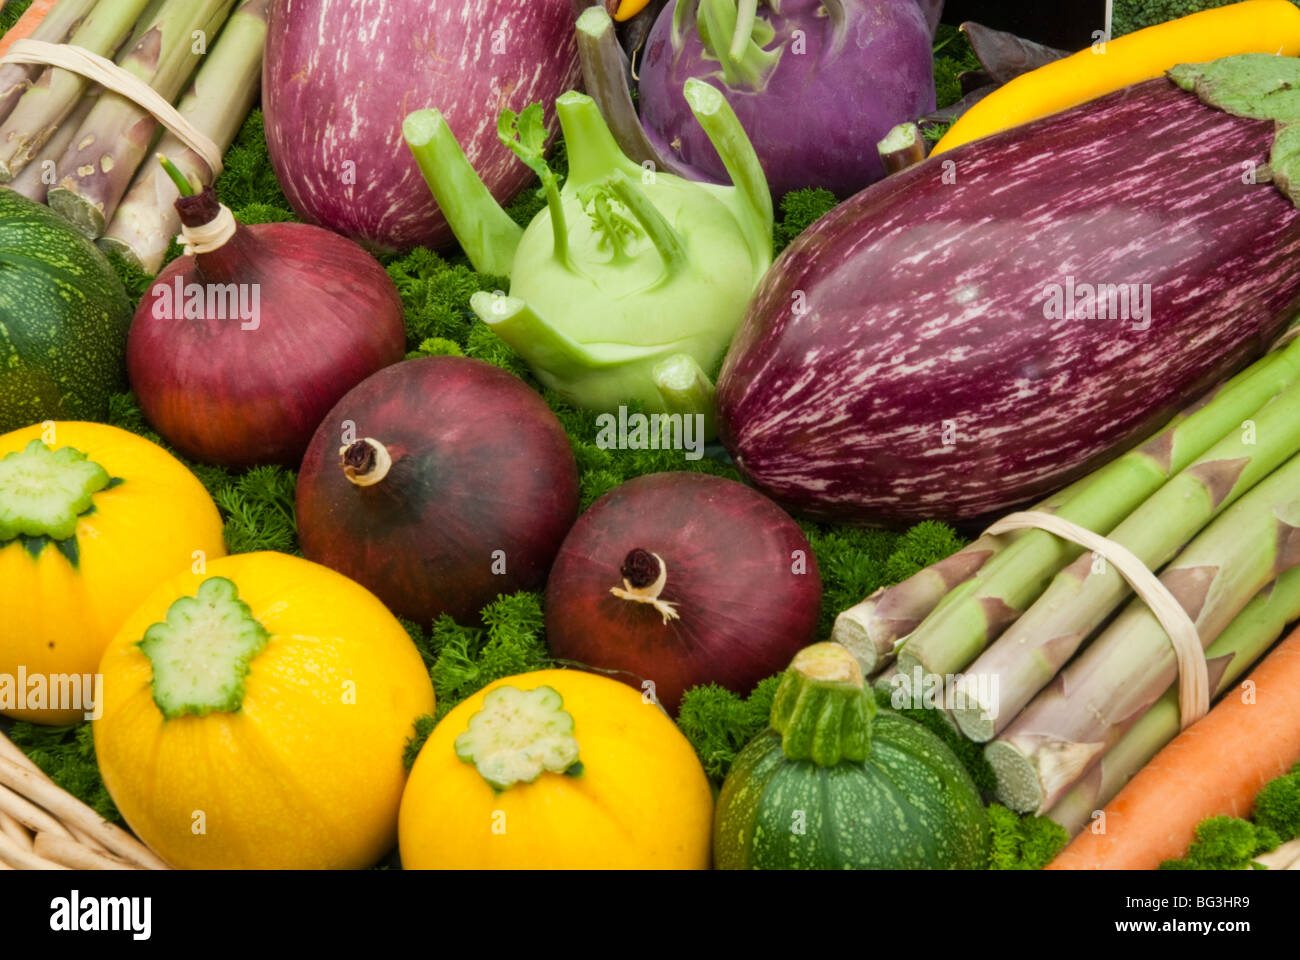 Squash, Eggplant, Asparagus, Kohlrabi, Onion, Zucchini, carrot Harvested Vegetables Stock Photo